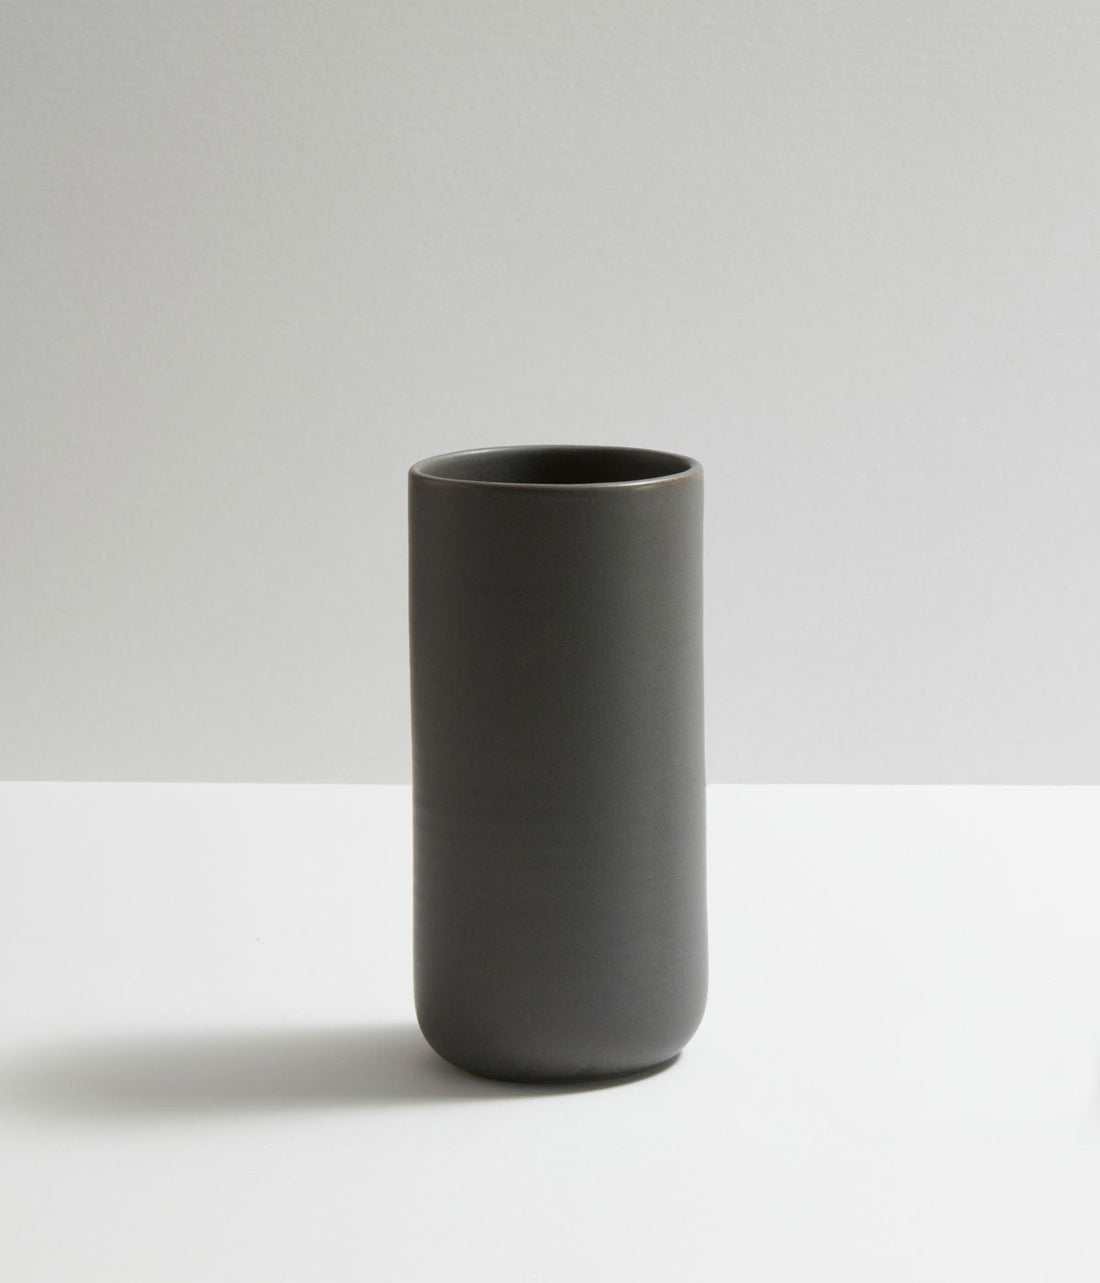 Vase – Sage green